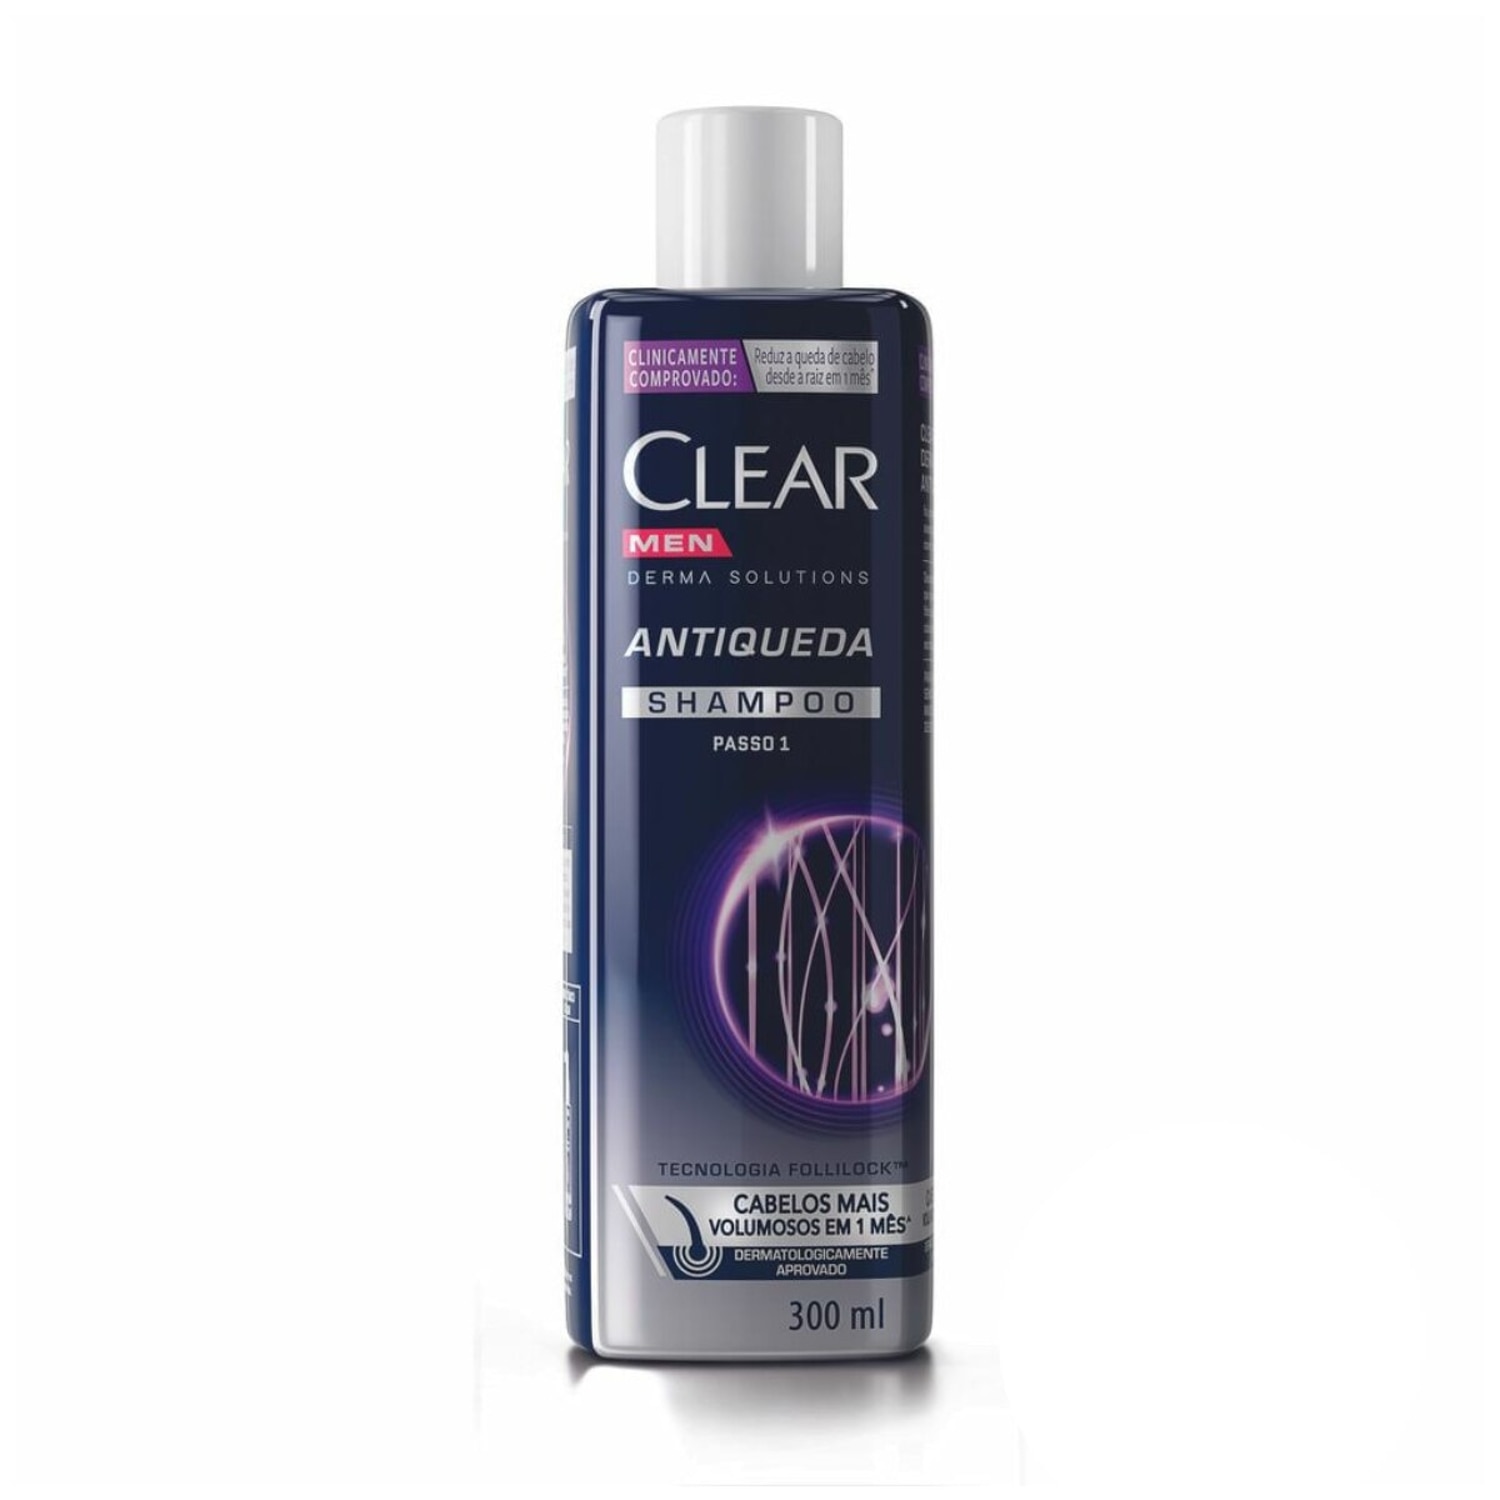 Shampoo Antiqueda Clear Men Derma Solutions 300ml